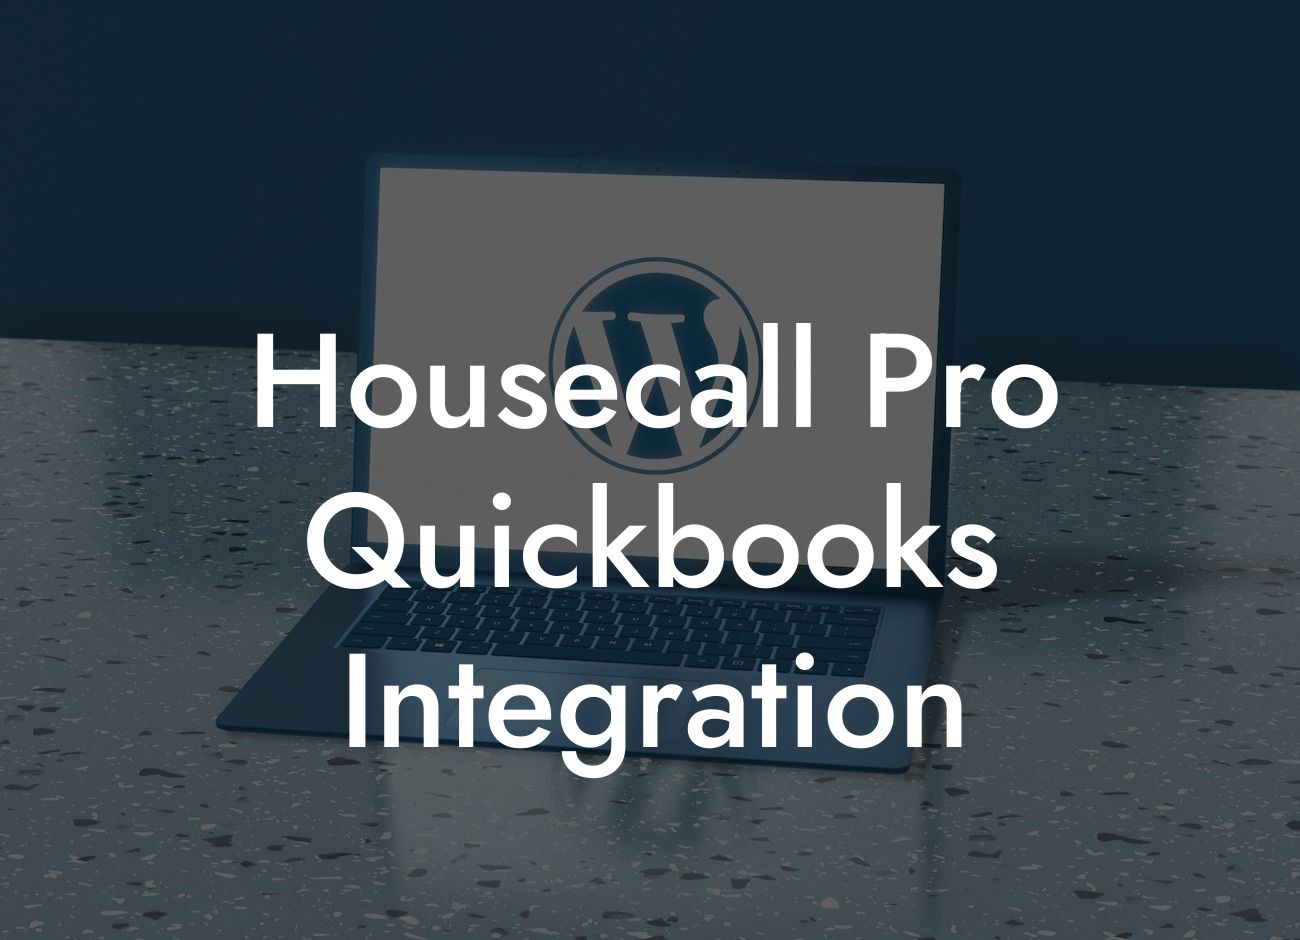 Housecall Pro Quickbooks Integration